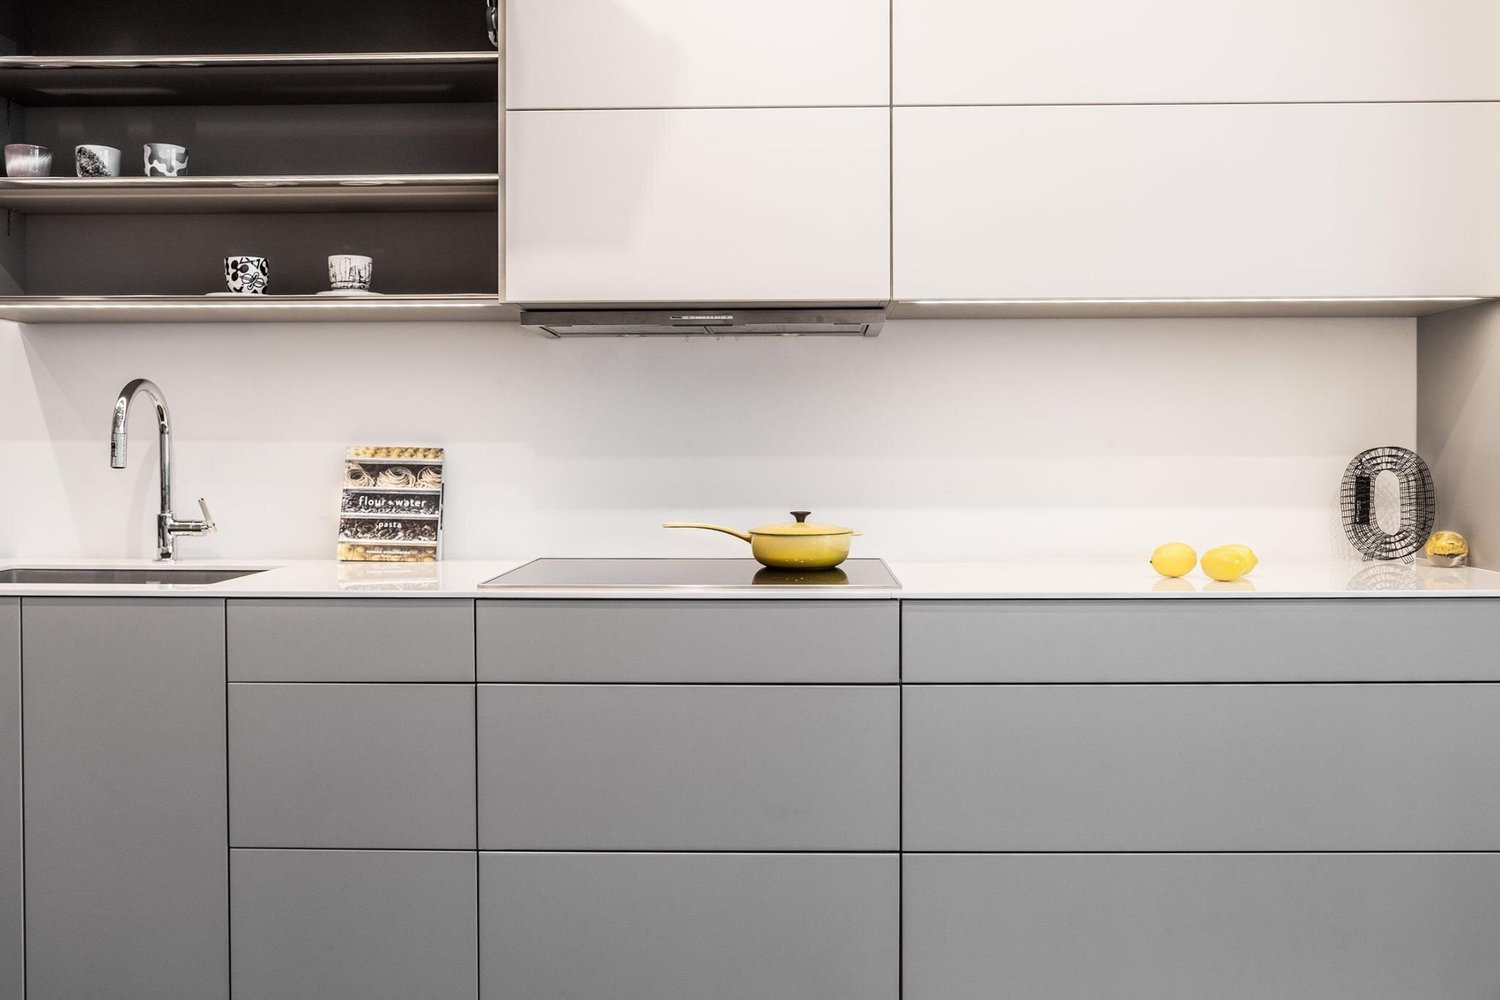 Minimal Look, Maximum Storage with European Kitchen Cabinets